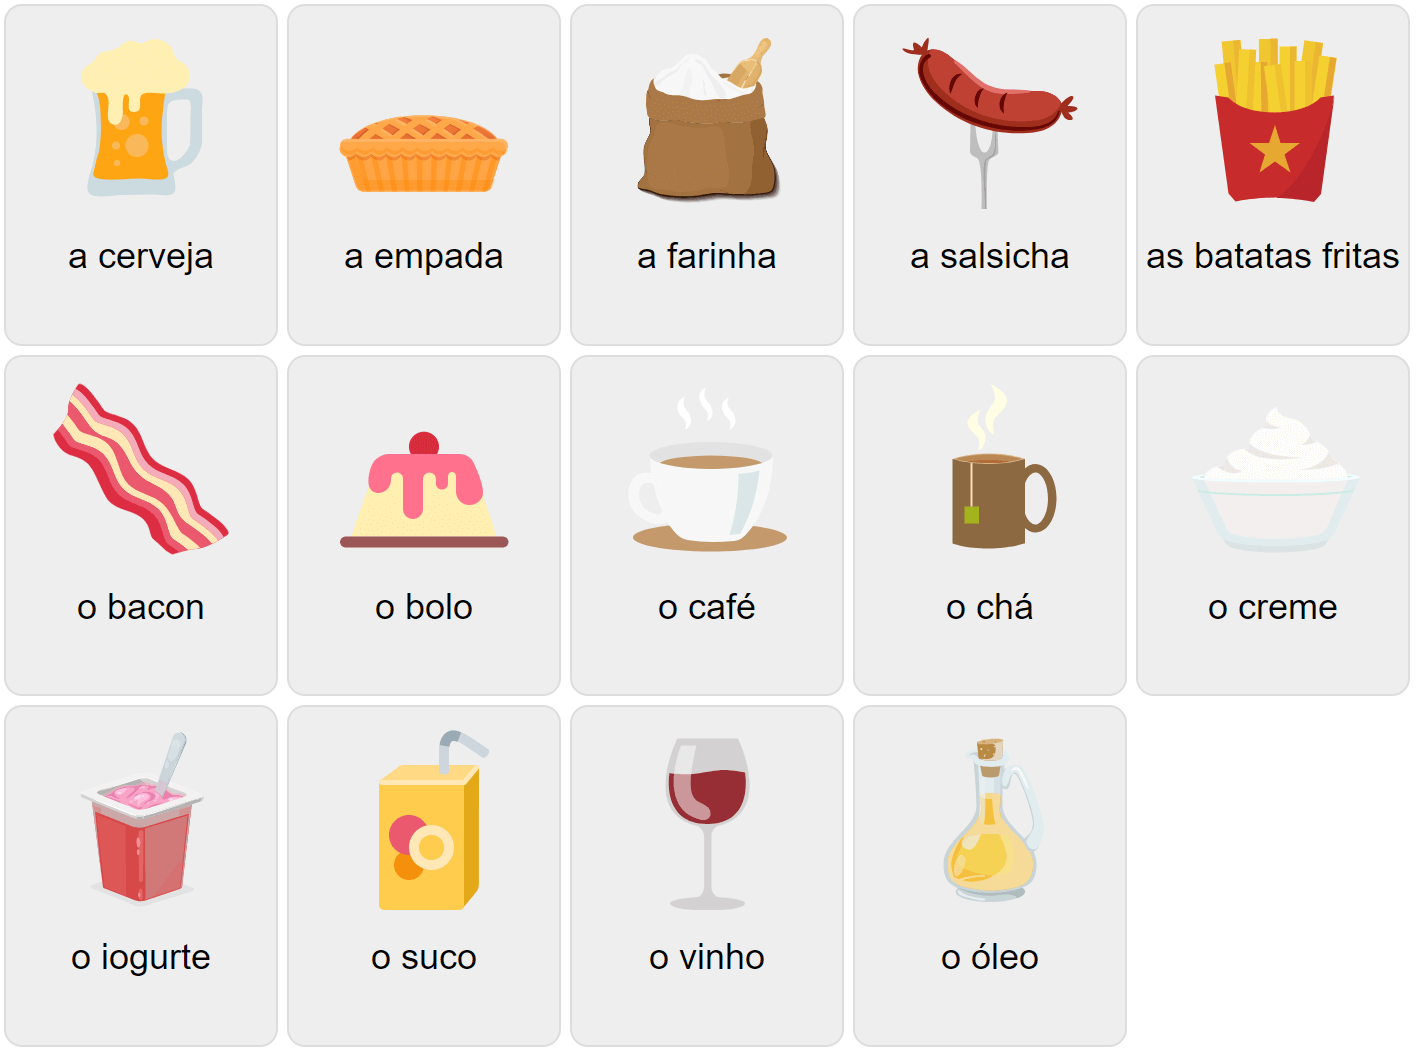 Food in Portuguese 2